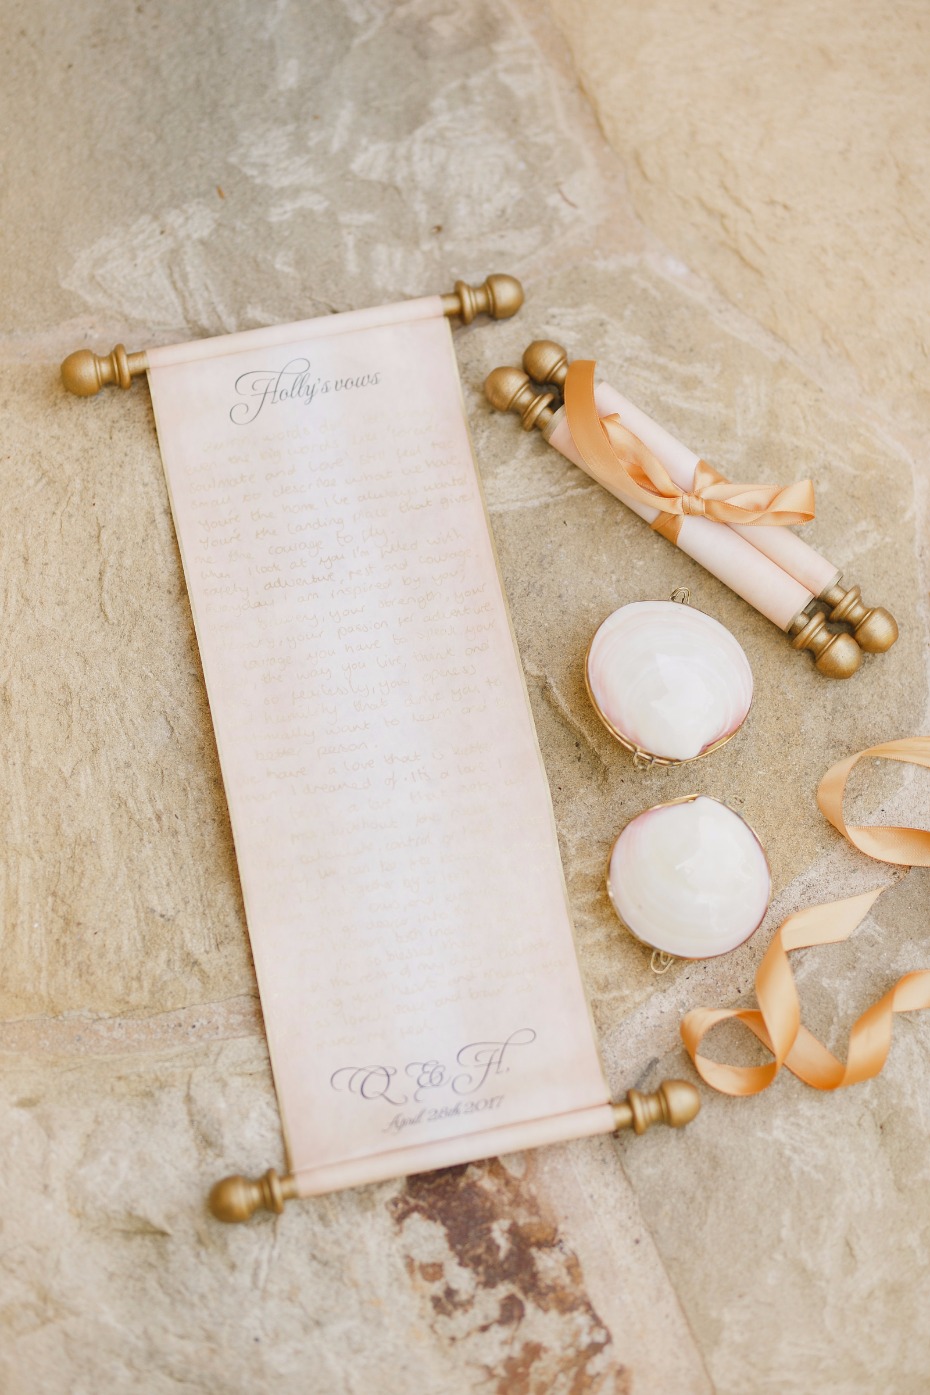 wedding vows on a scroll